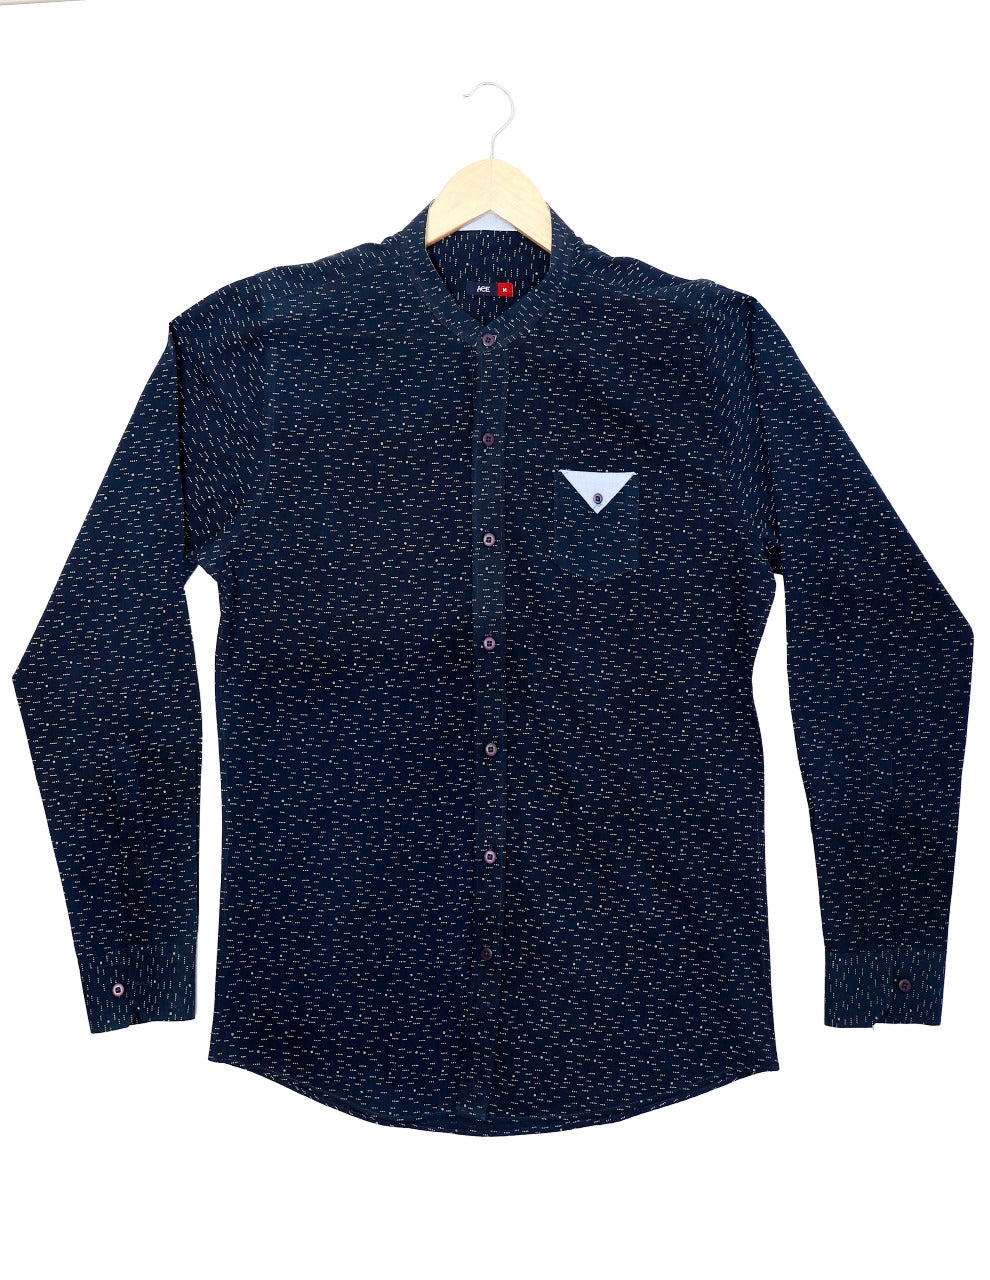 Men's Navy Blue Full Sleeve Casual Shirt - ACE 70060 (S20)